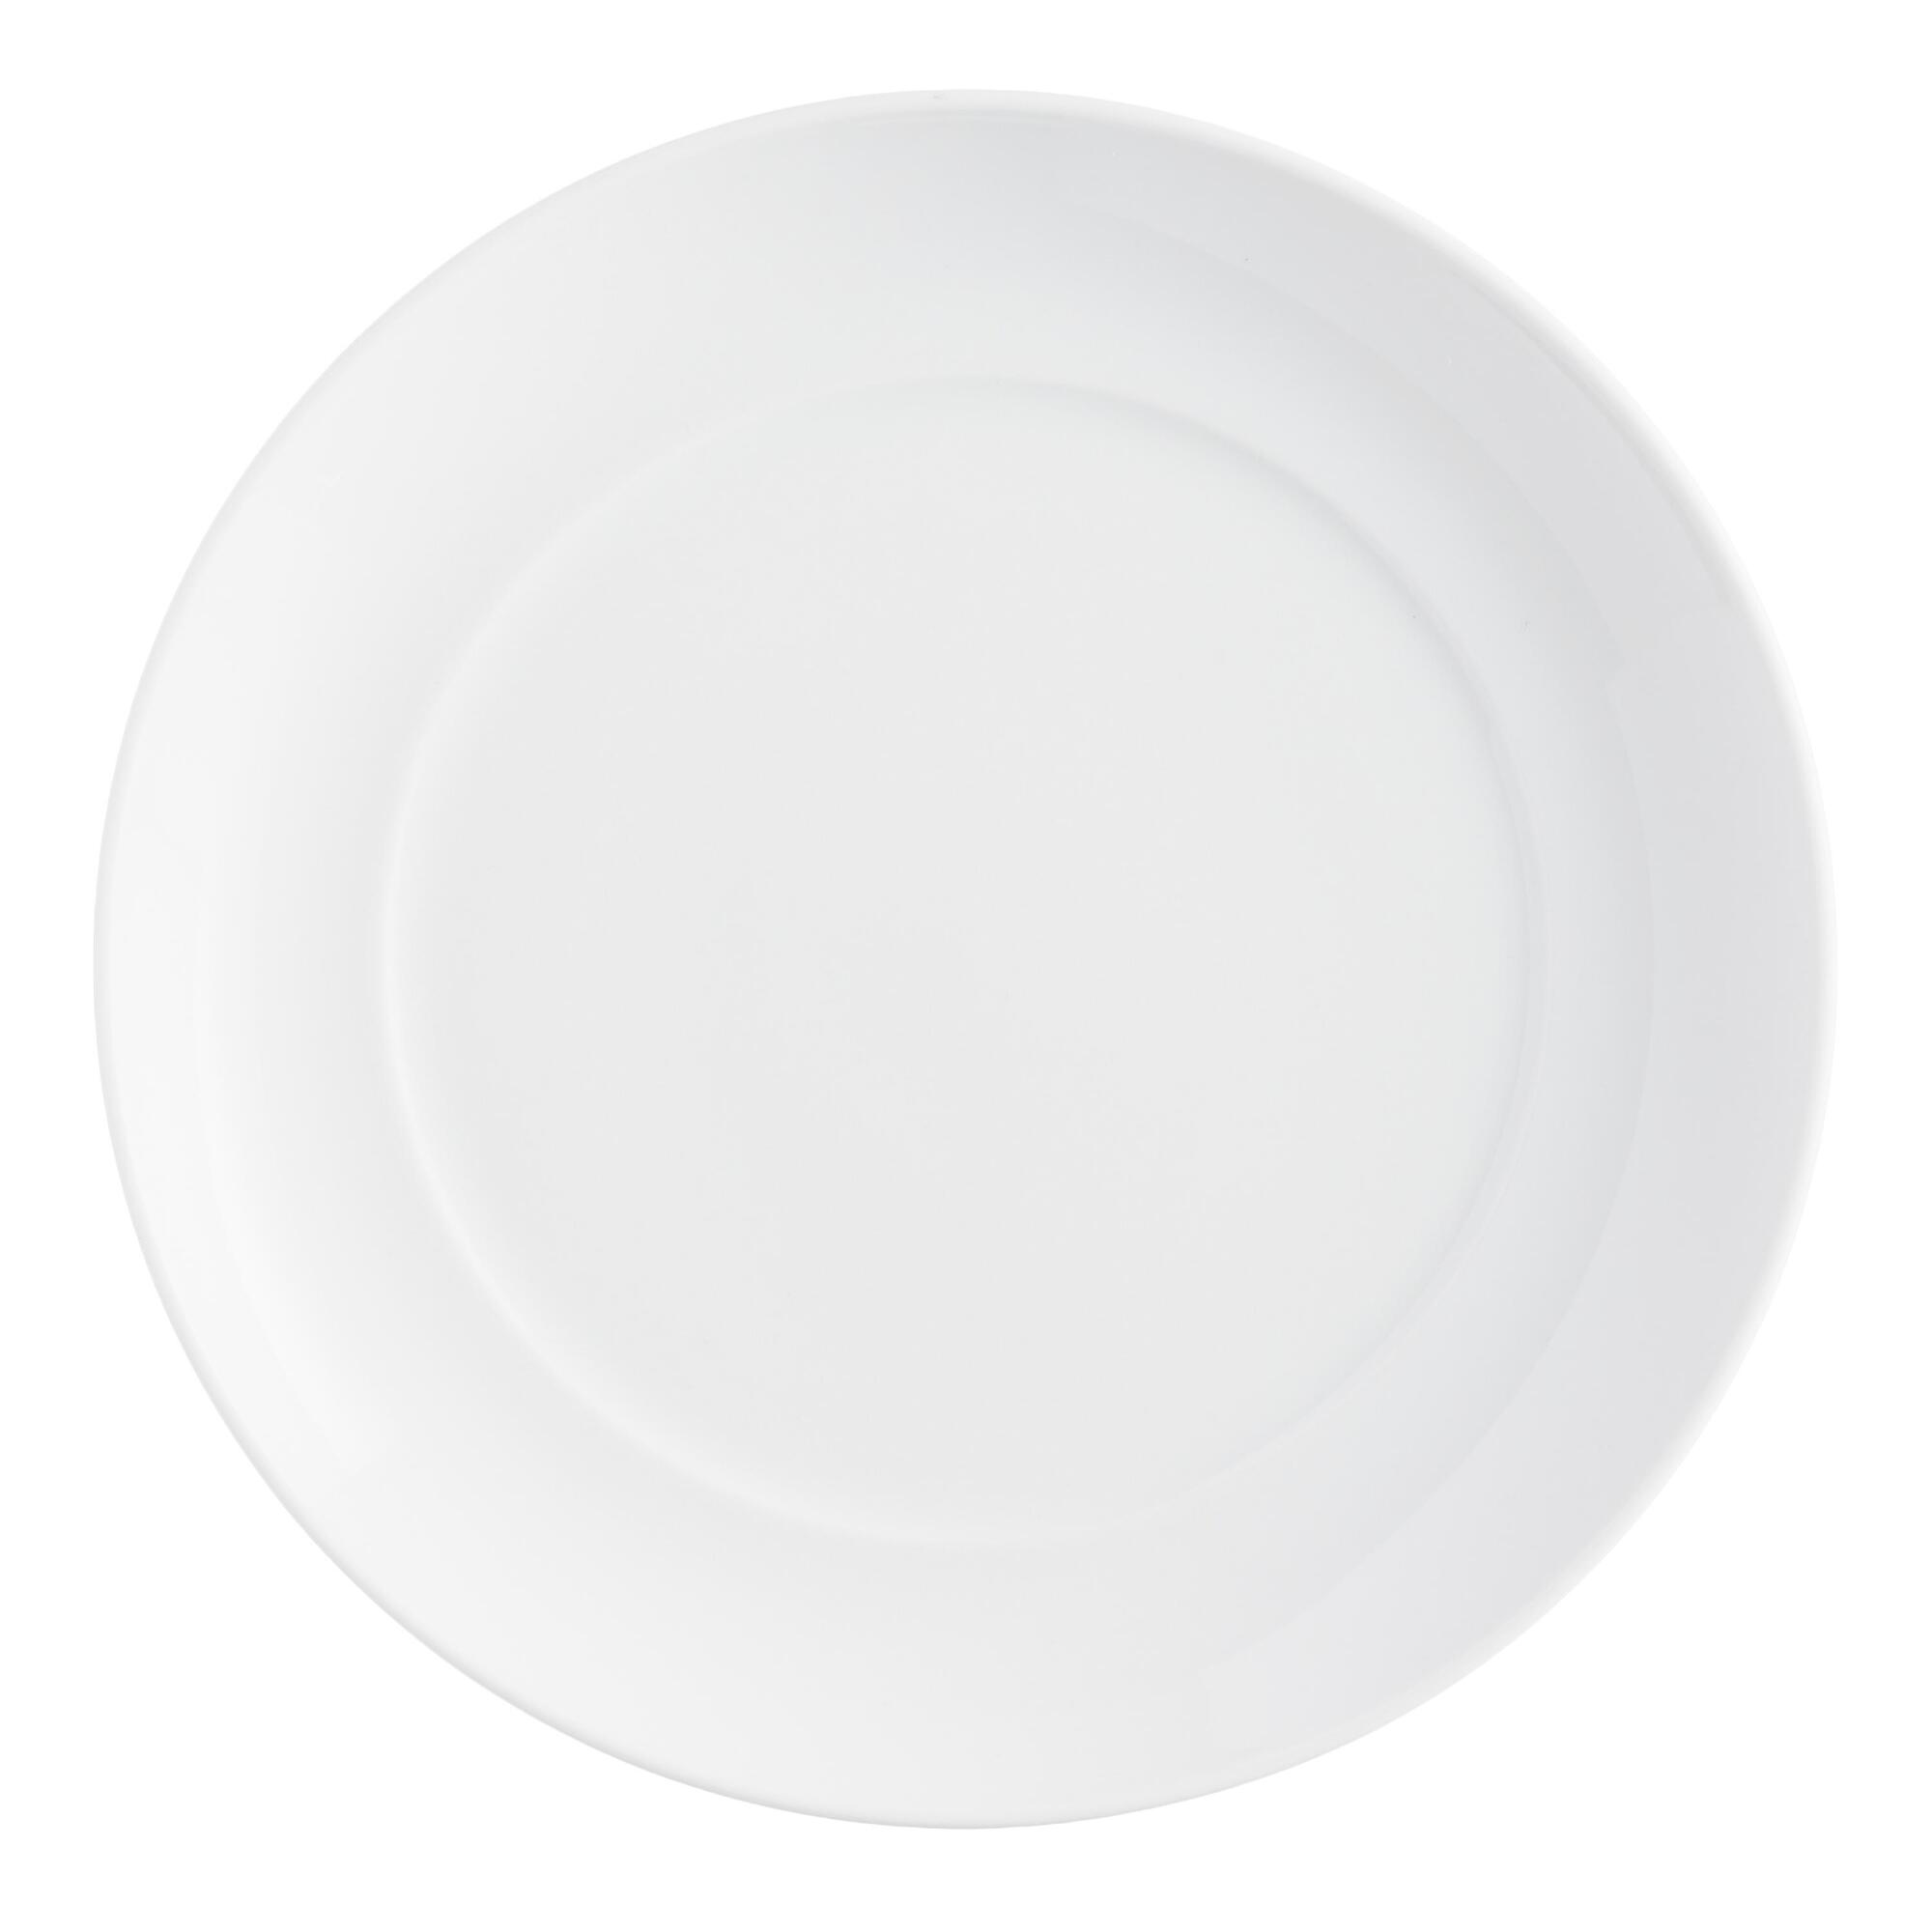 White Porcelain Spin Salad Plates Set Of 4 by World Market